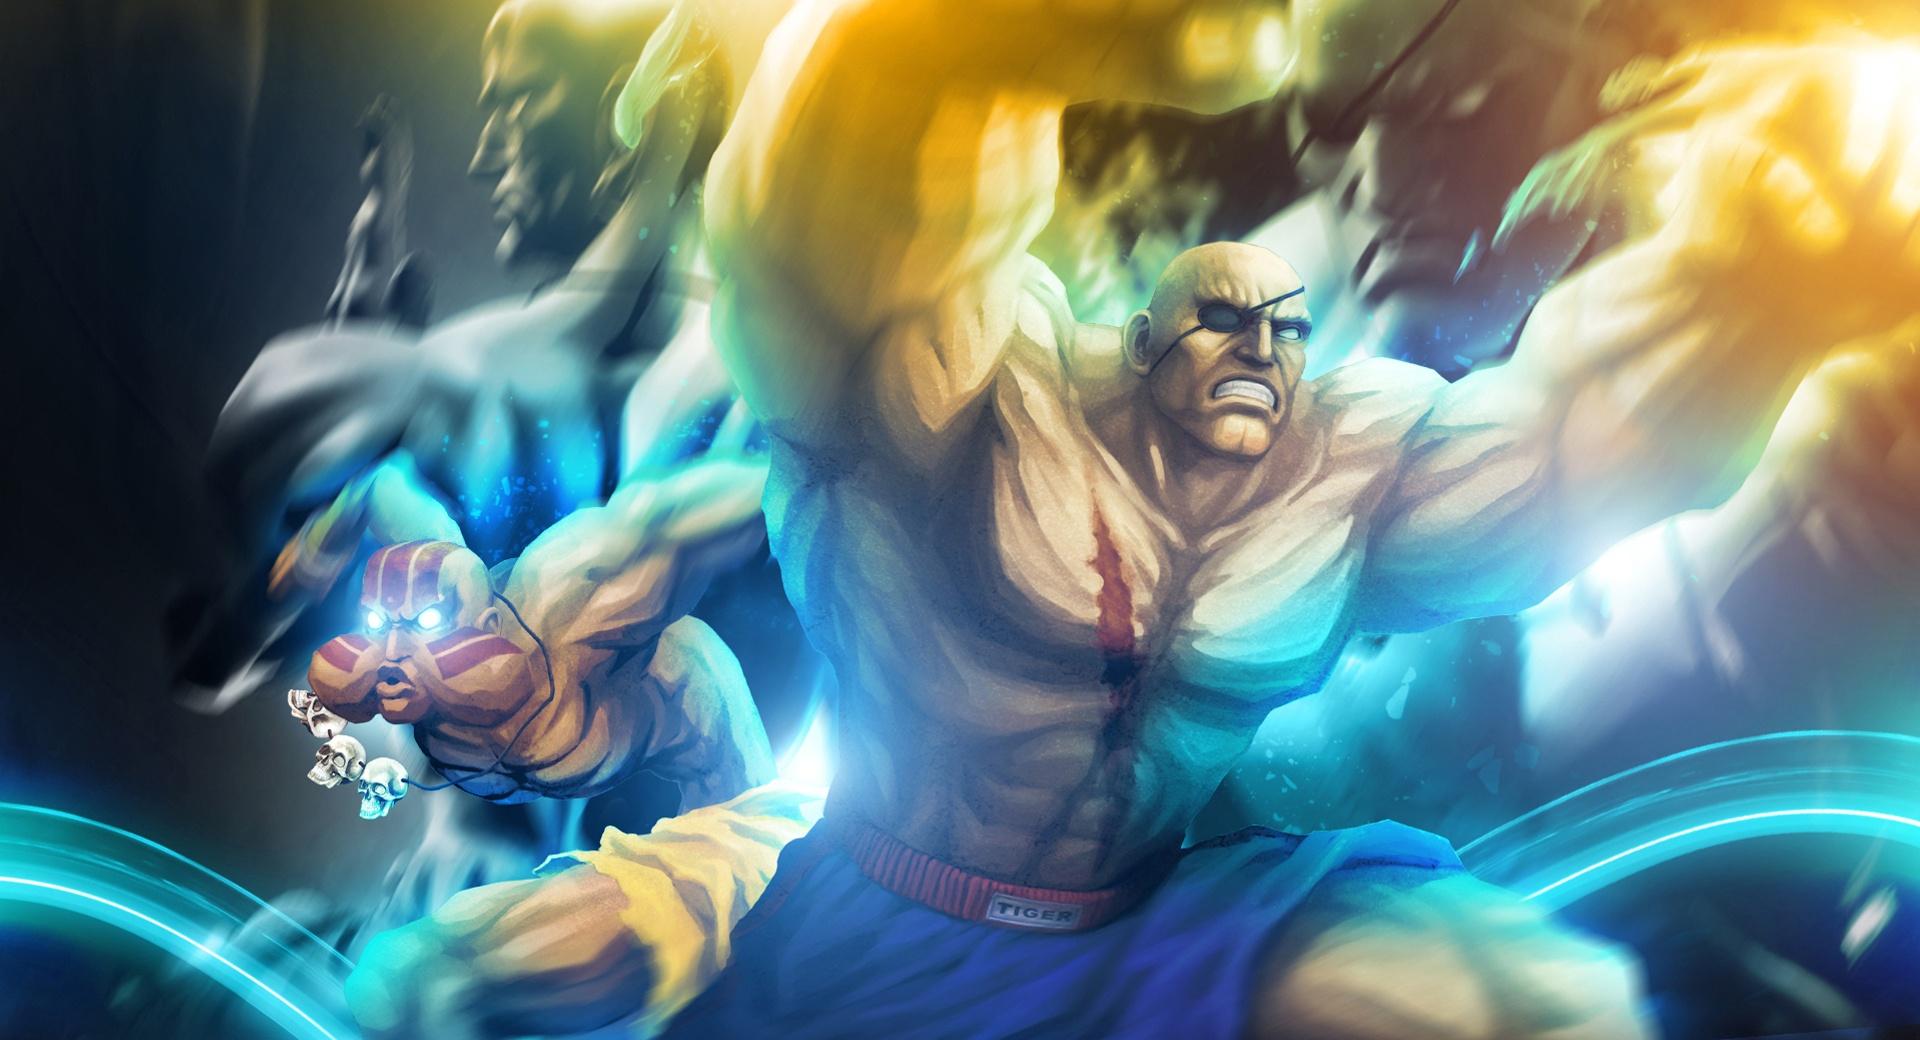 Street Fighter X Tekken - Sagat Dhalsim at 1280 x 960 size wallpapers HD quality